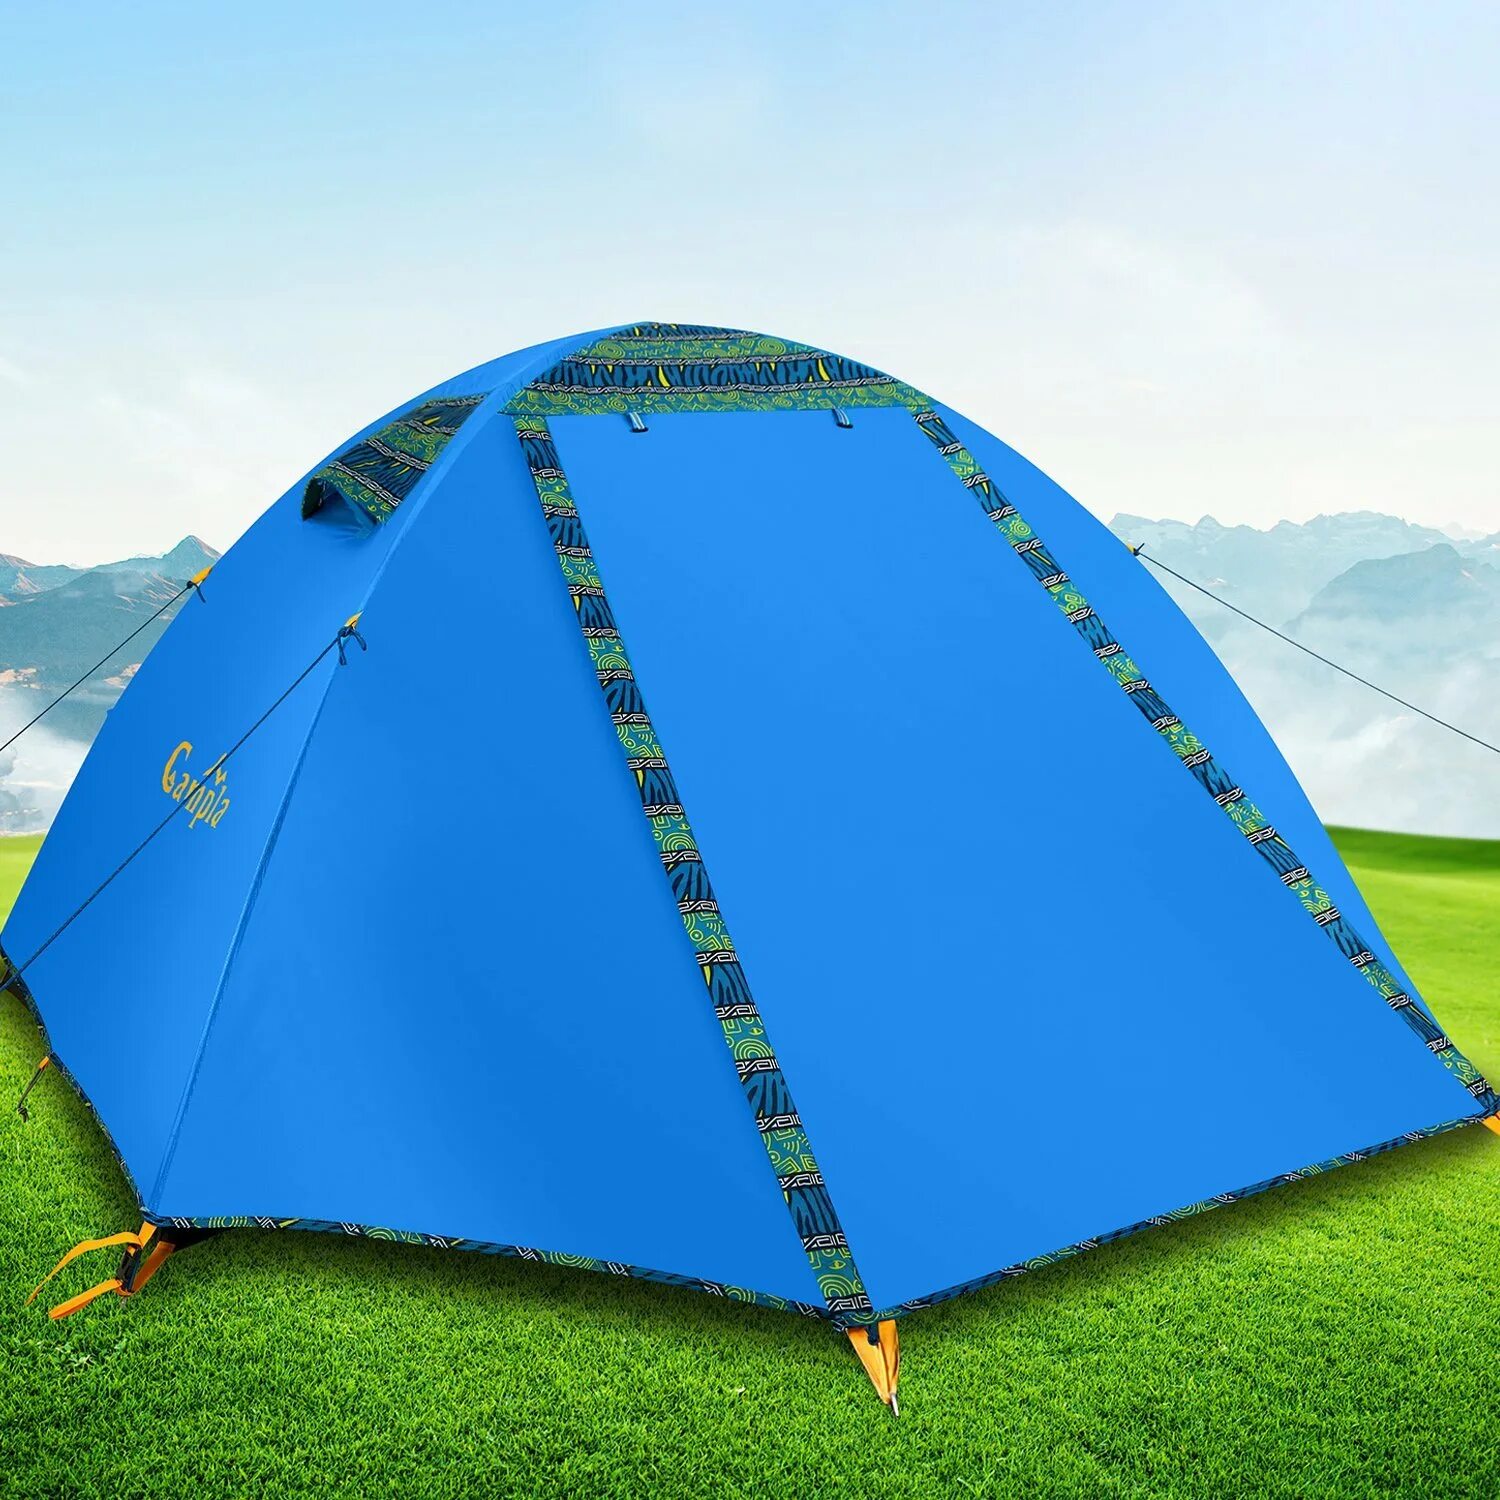 Camping tent 2. Палатка best Camp Texel 2. Camp Nagoa 4 Plus. Палатка best Camp 165*165. Палатка Basecamp Tent.